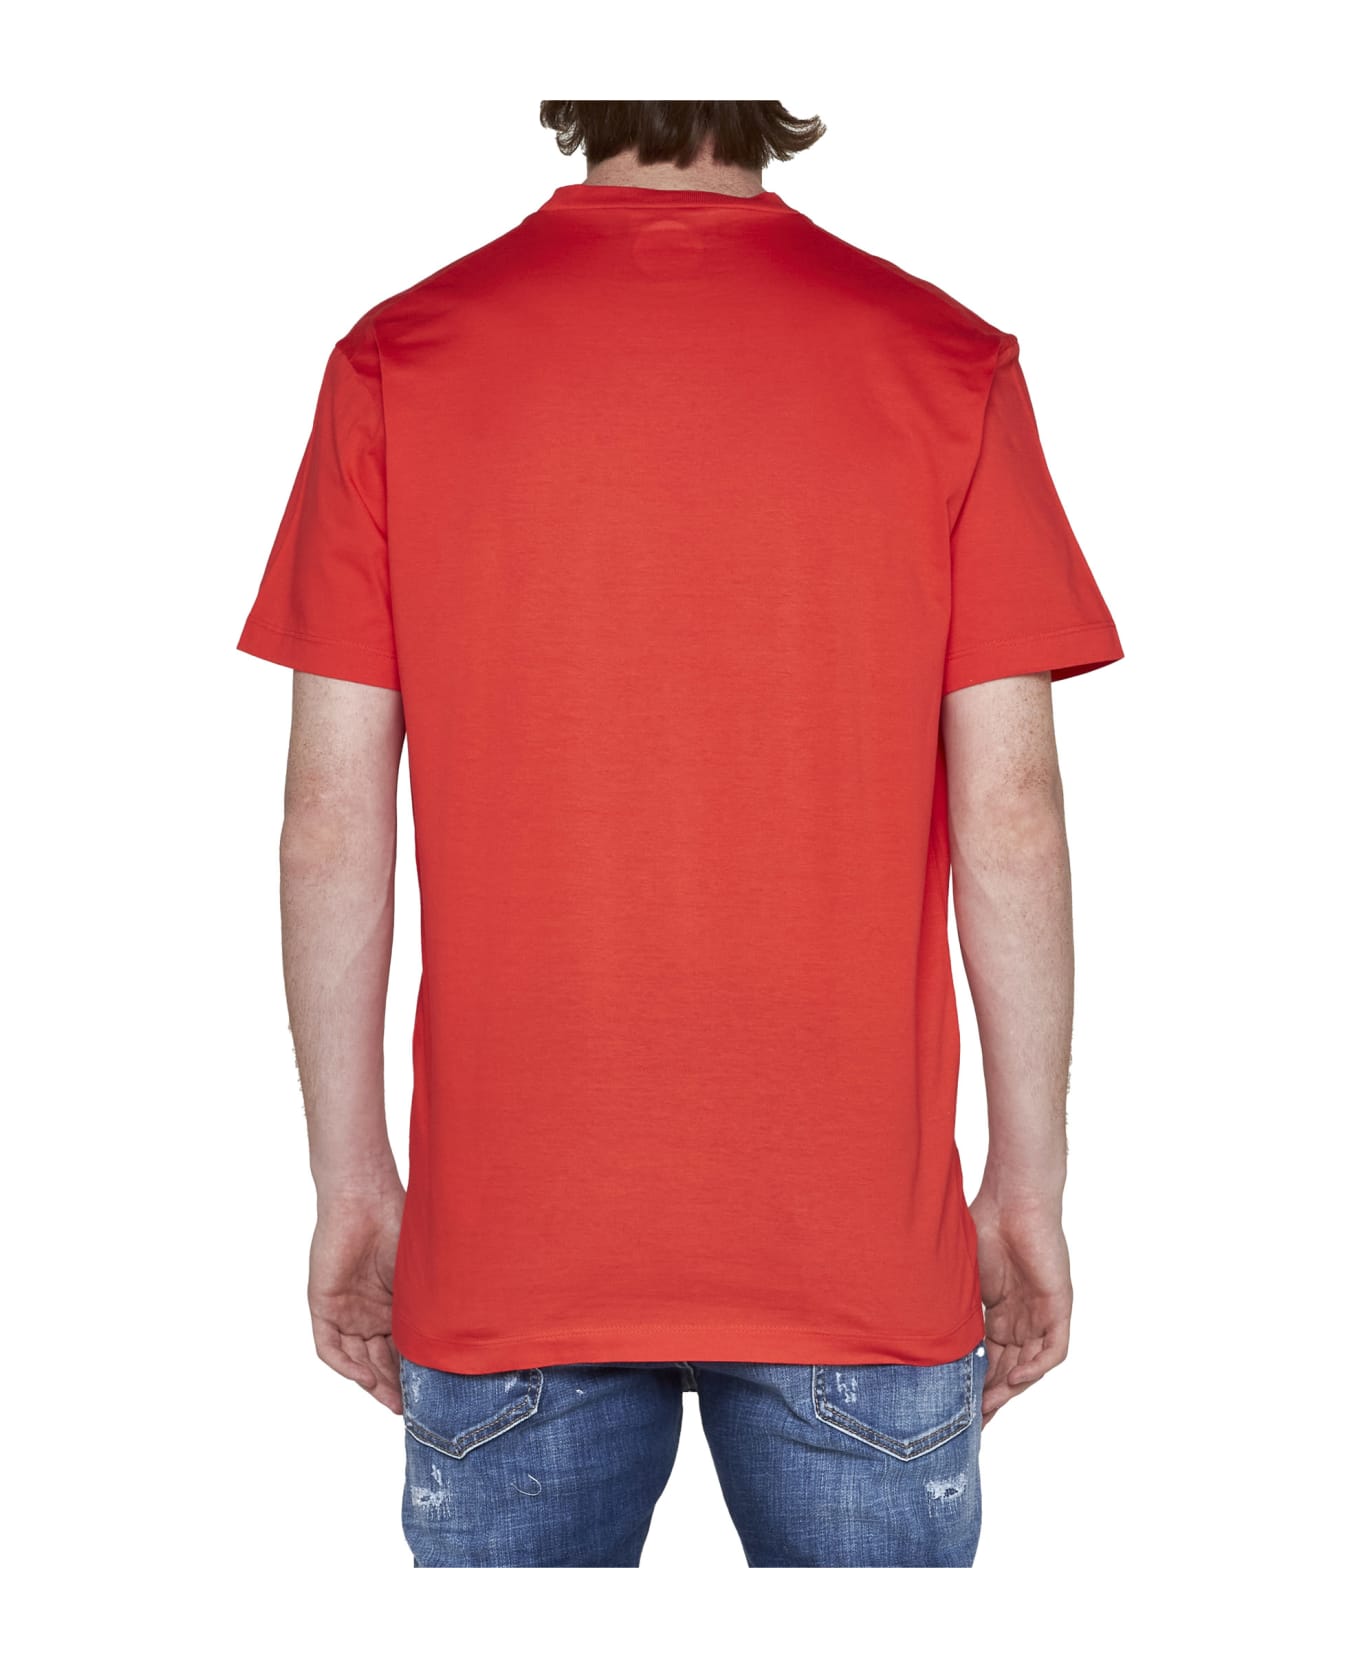 Dsquared2 T-shirt - Orange シャツ